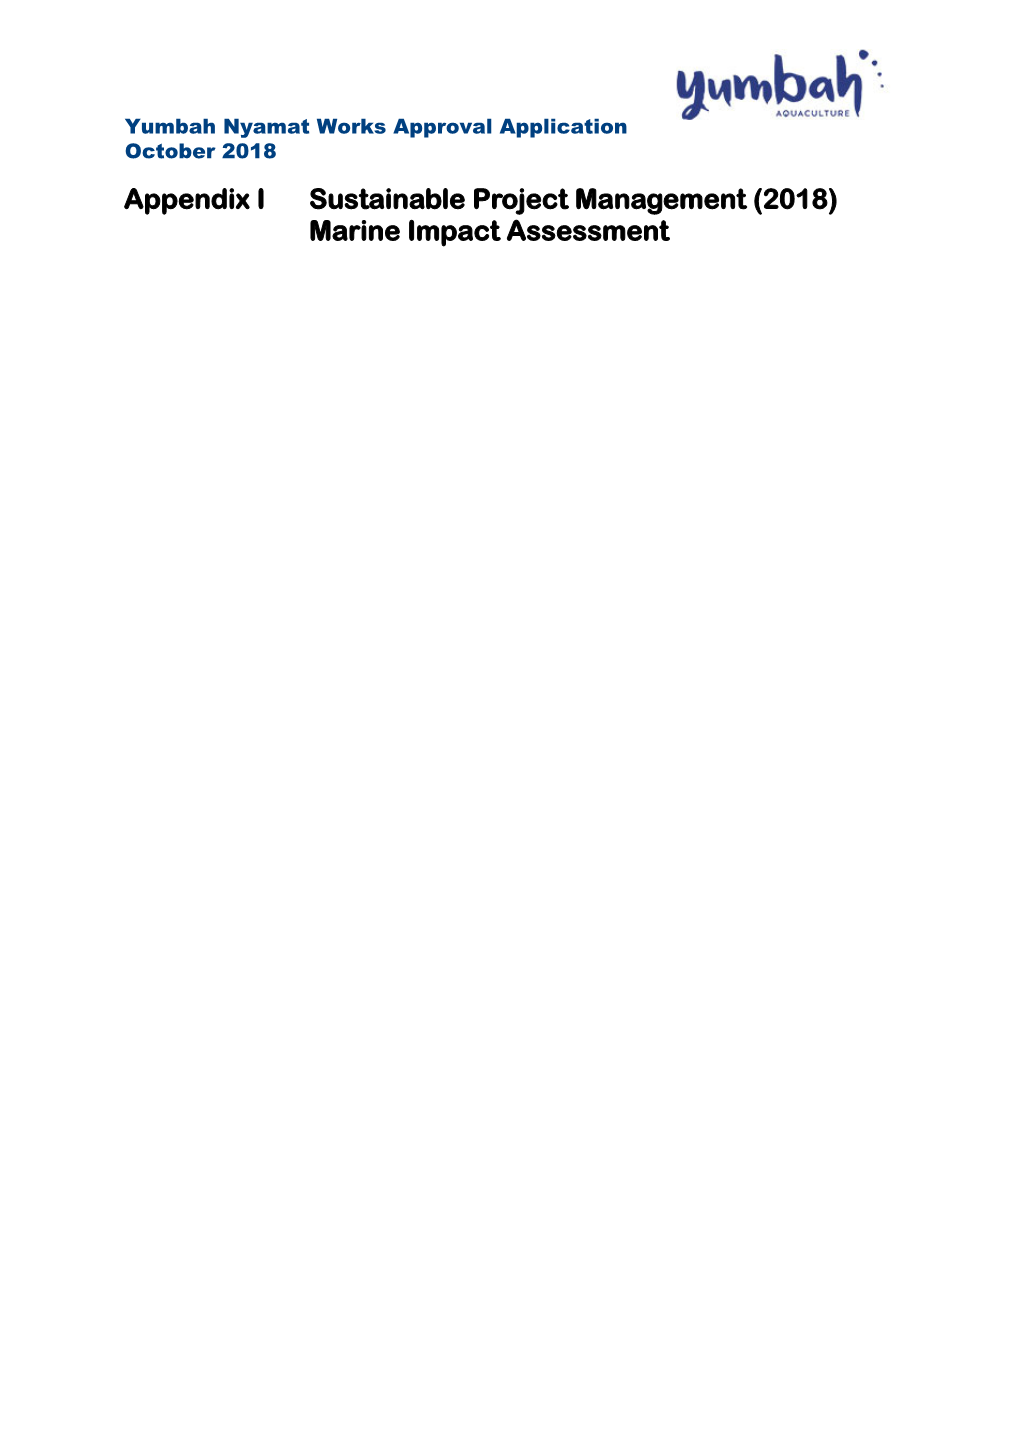 Appendix I Sustainable Project Management (2018) Marine Impact Assessment